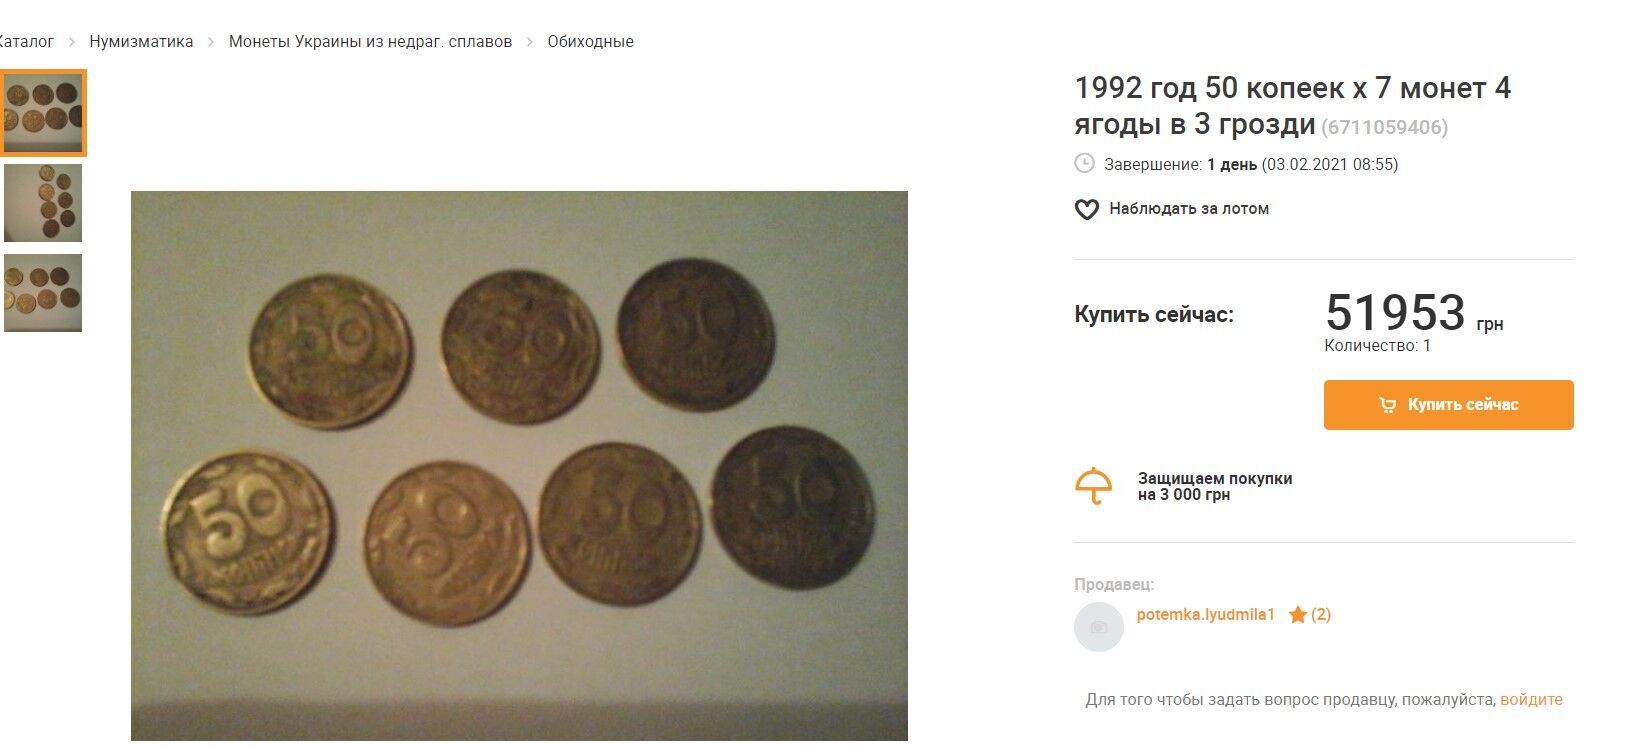 Монеты продают за тысячи гривен